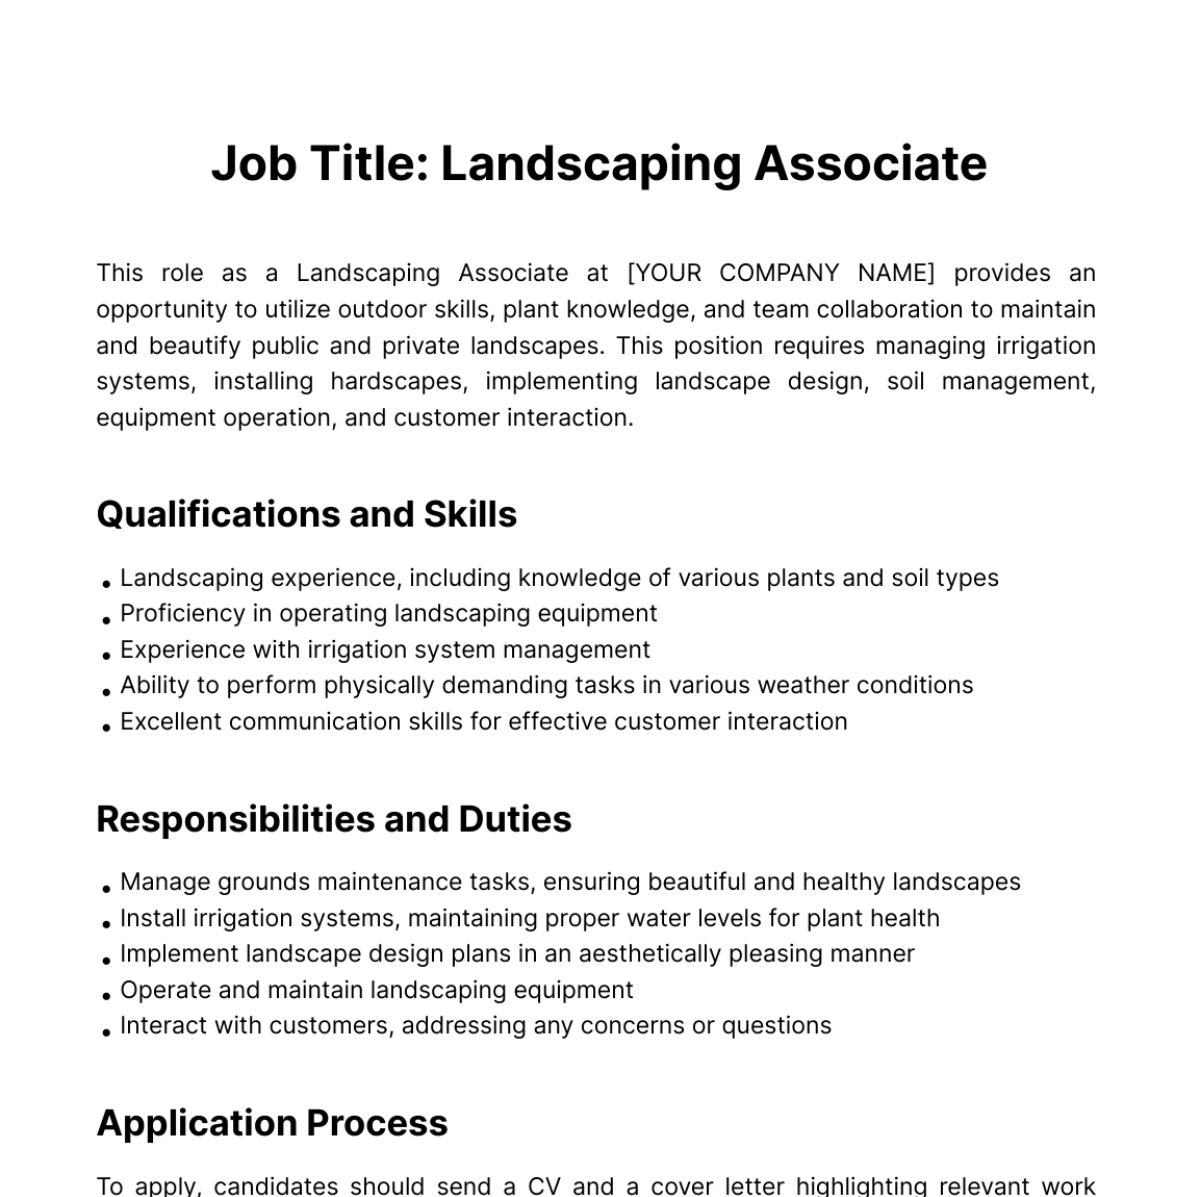 Landscaping Associates Job Description Template